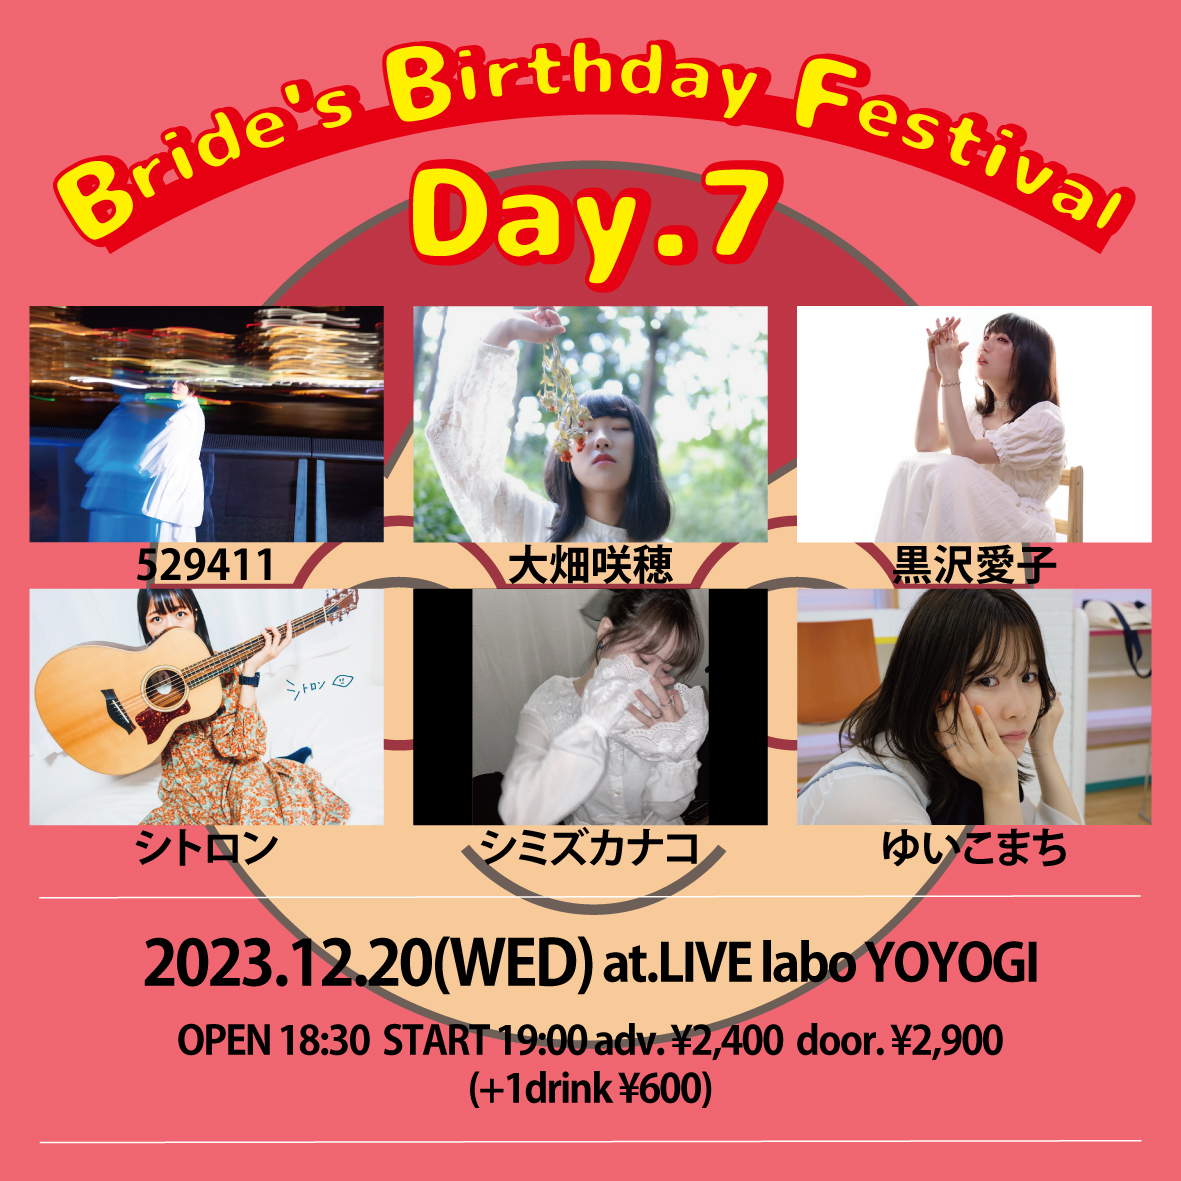 Bride's Birthday Festival 2023 Day7